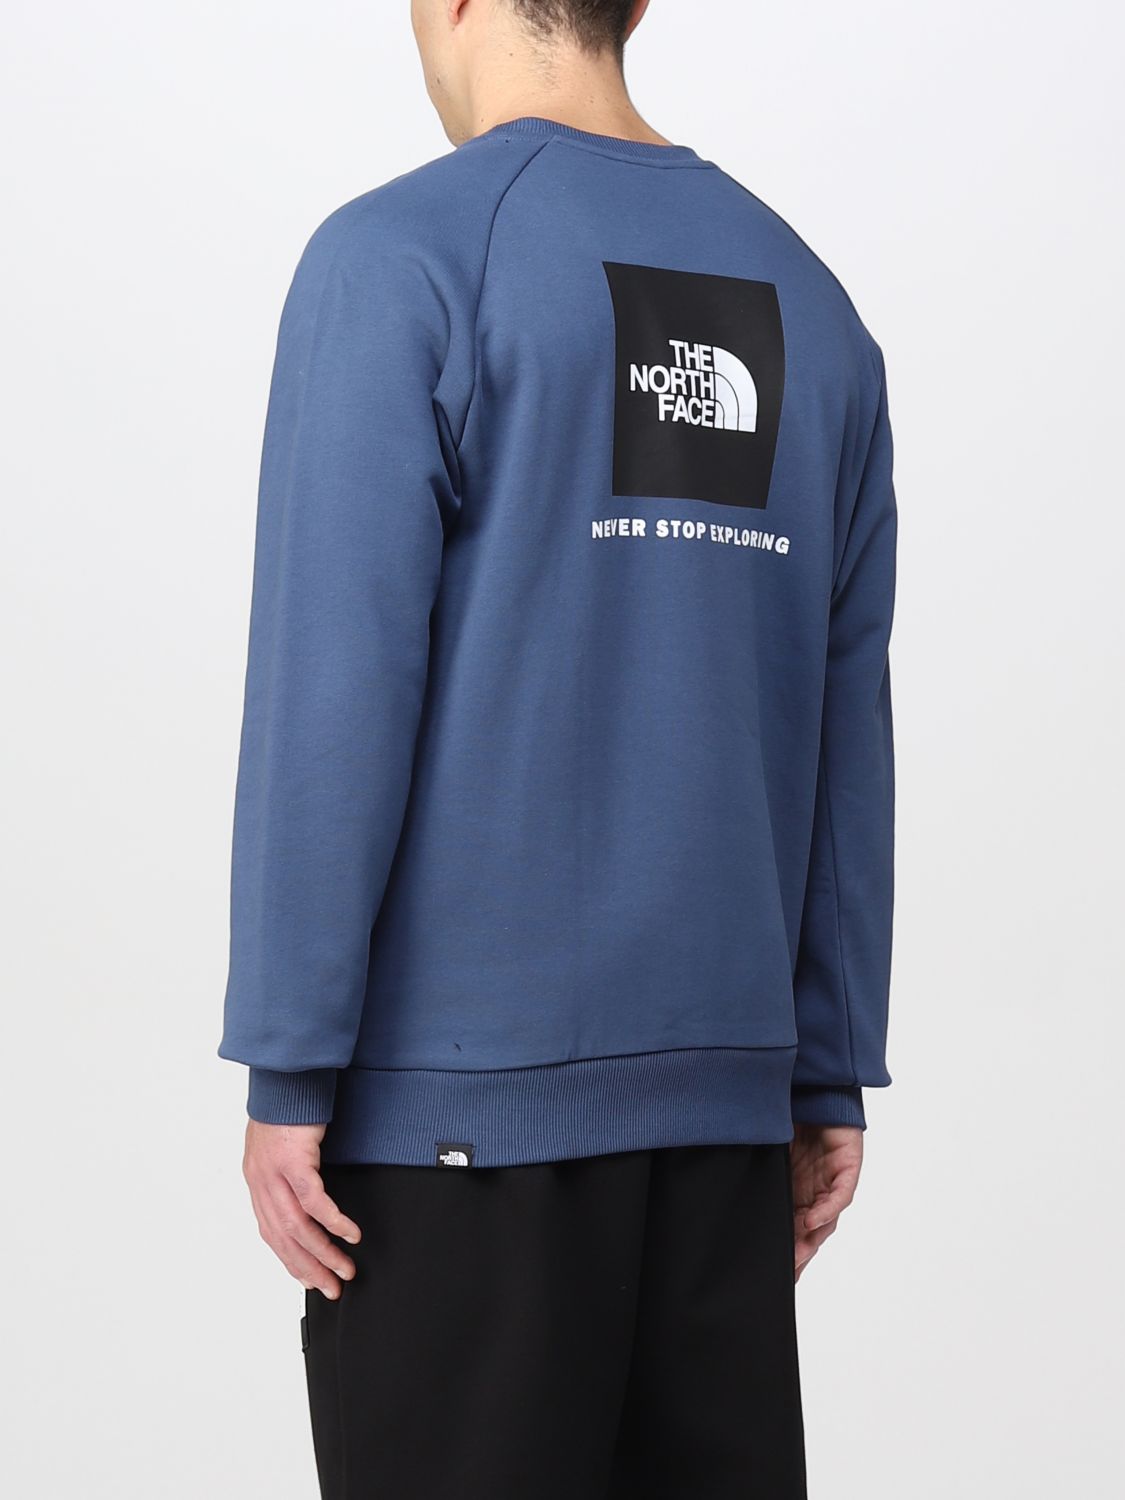 Henfald Giftig skarpt THE NORTH FACE: sweatshirt for man - Blue | The North Face sweatshirt  NF0A4SZ9 online at GIGLIO.COM